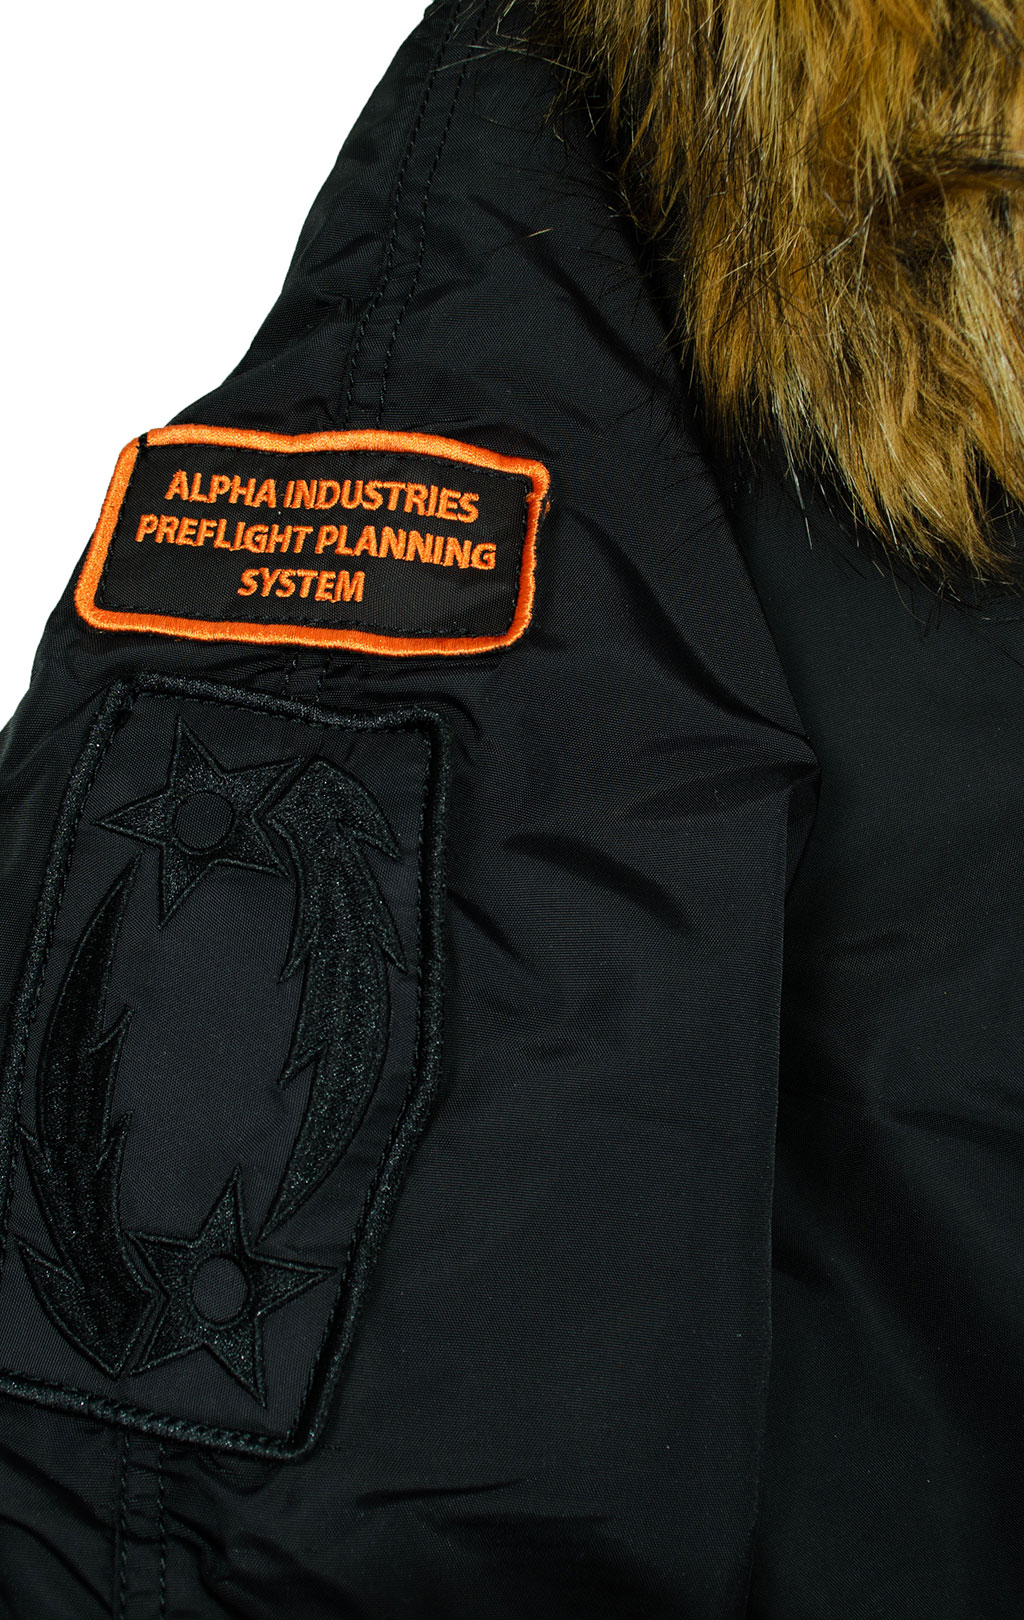 Аляска короткая ALPHA INDUSTRIES PPS big size N-2B black/orange 